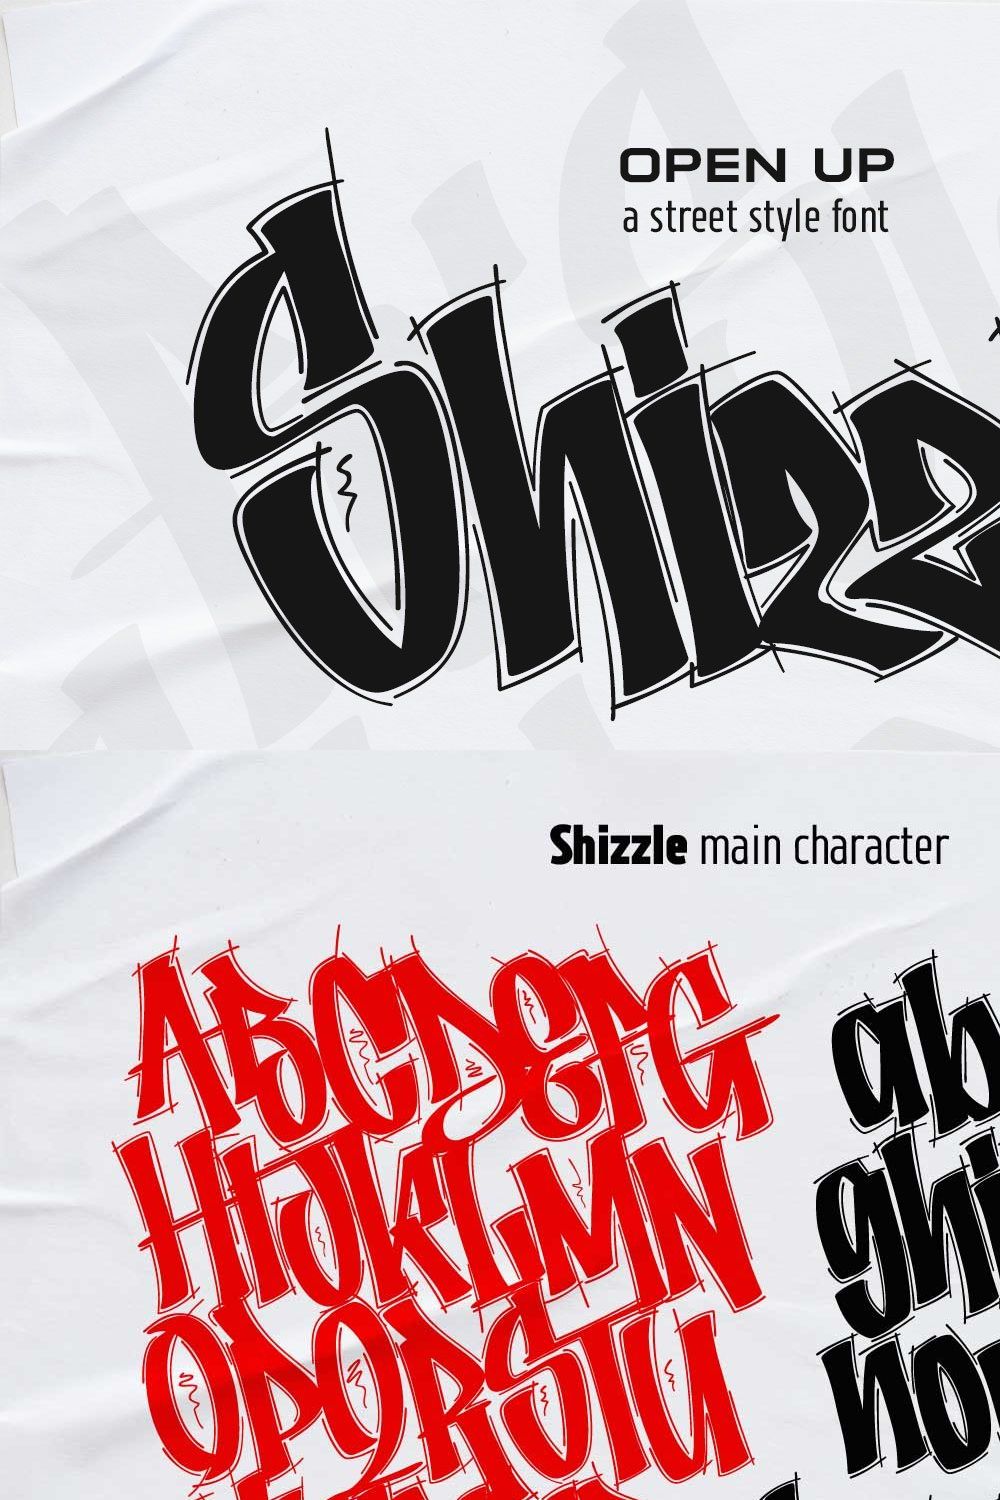 Shizzle - Graffiti Typeface pinterest preview image.